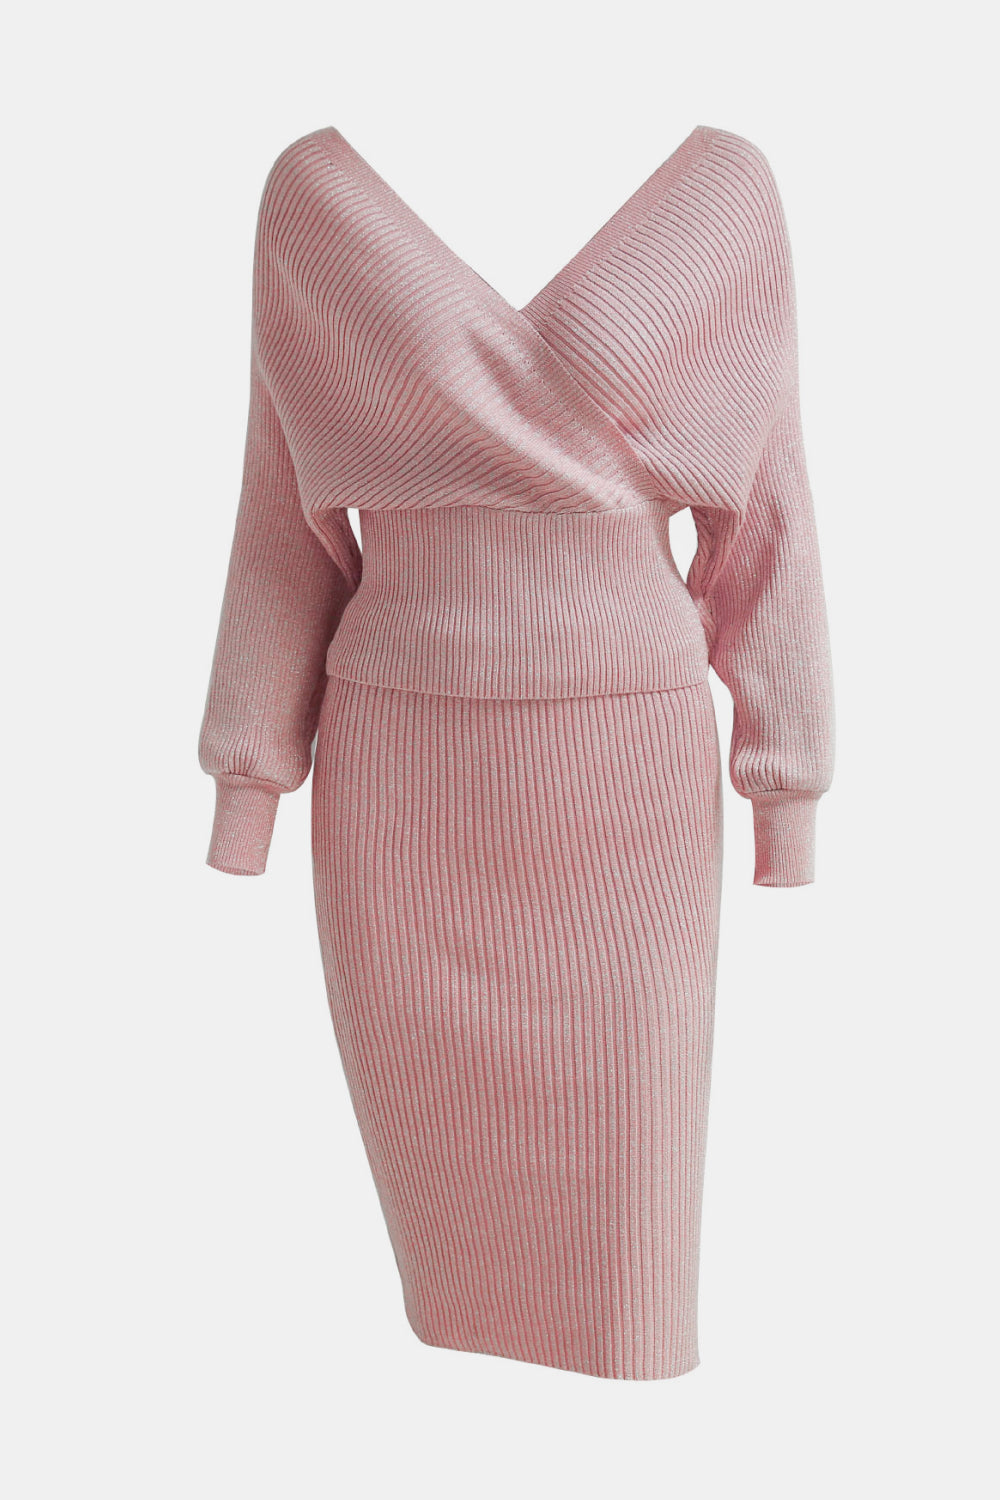 Dolman Sleeve Rib-Knit Top and Skirt Set